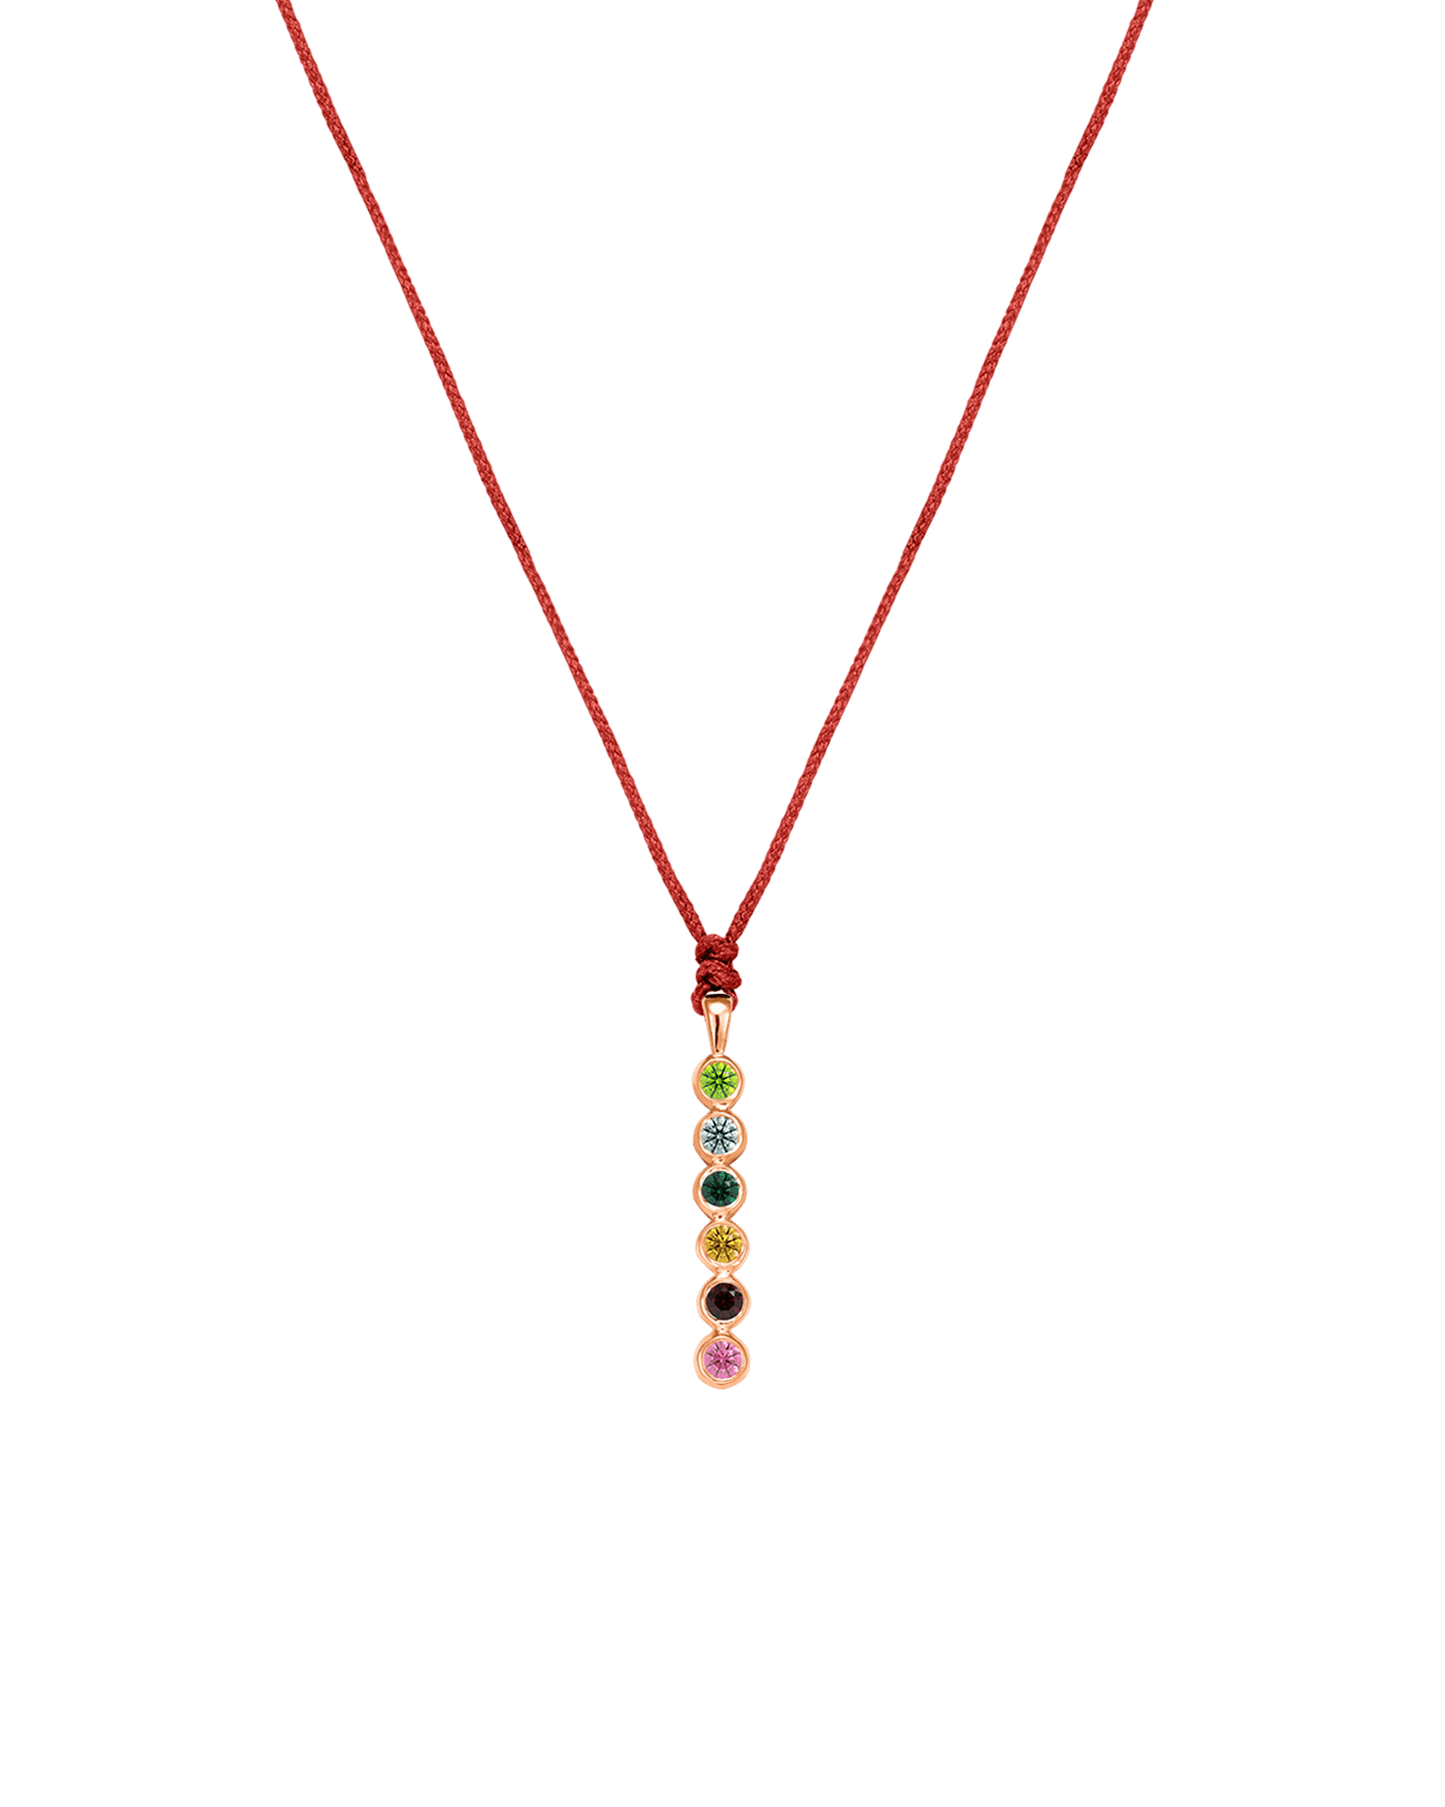 The Birthstones Bar Necklace - 14K Rose Gold Necklaces 14K Solid Gold Red 2 